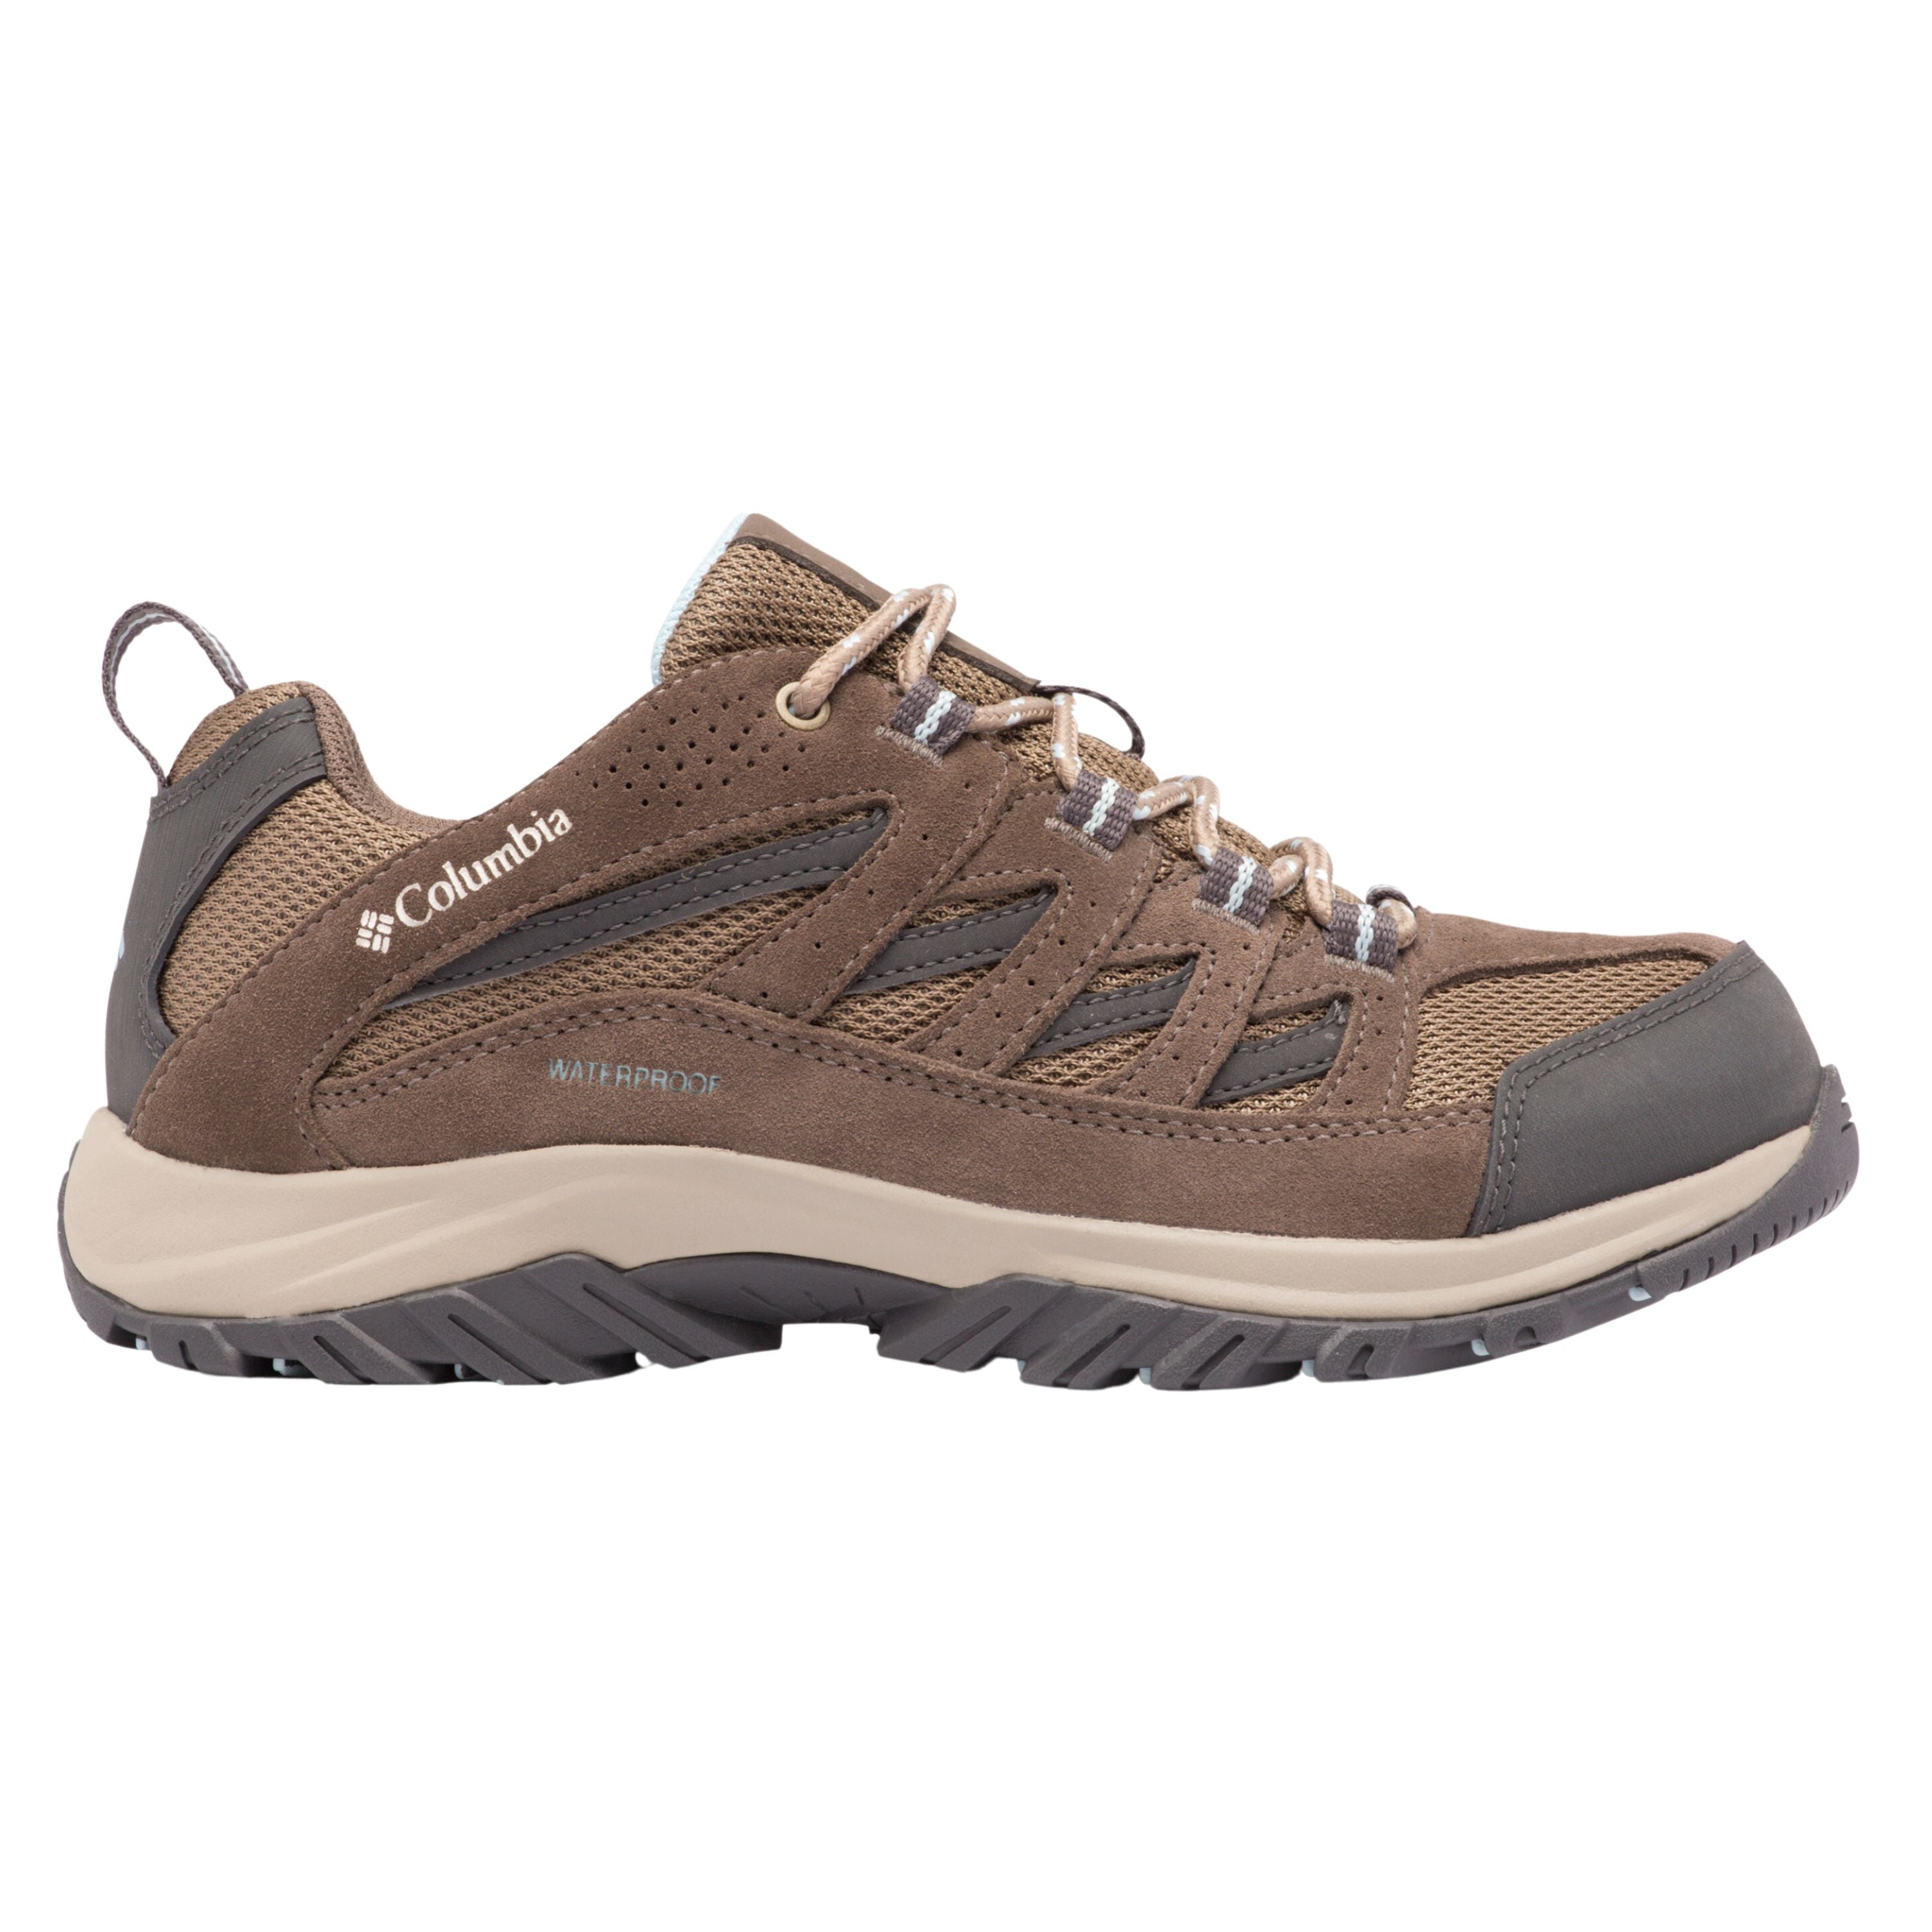 "Crestwood" Hiking shoes - Women's